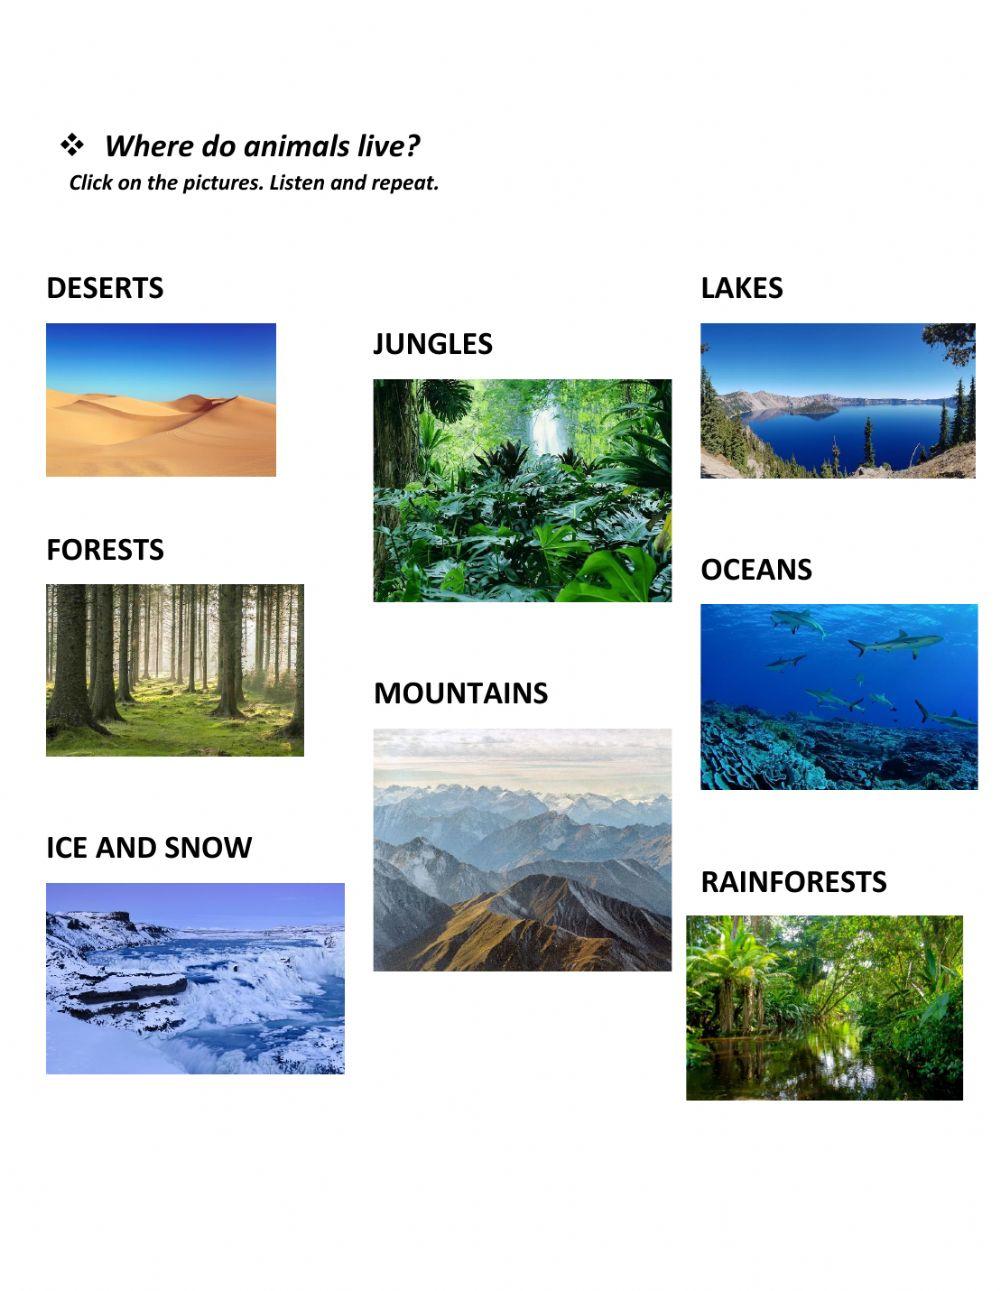 Animals and habitats